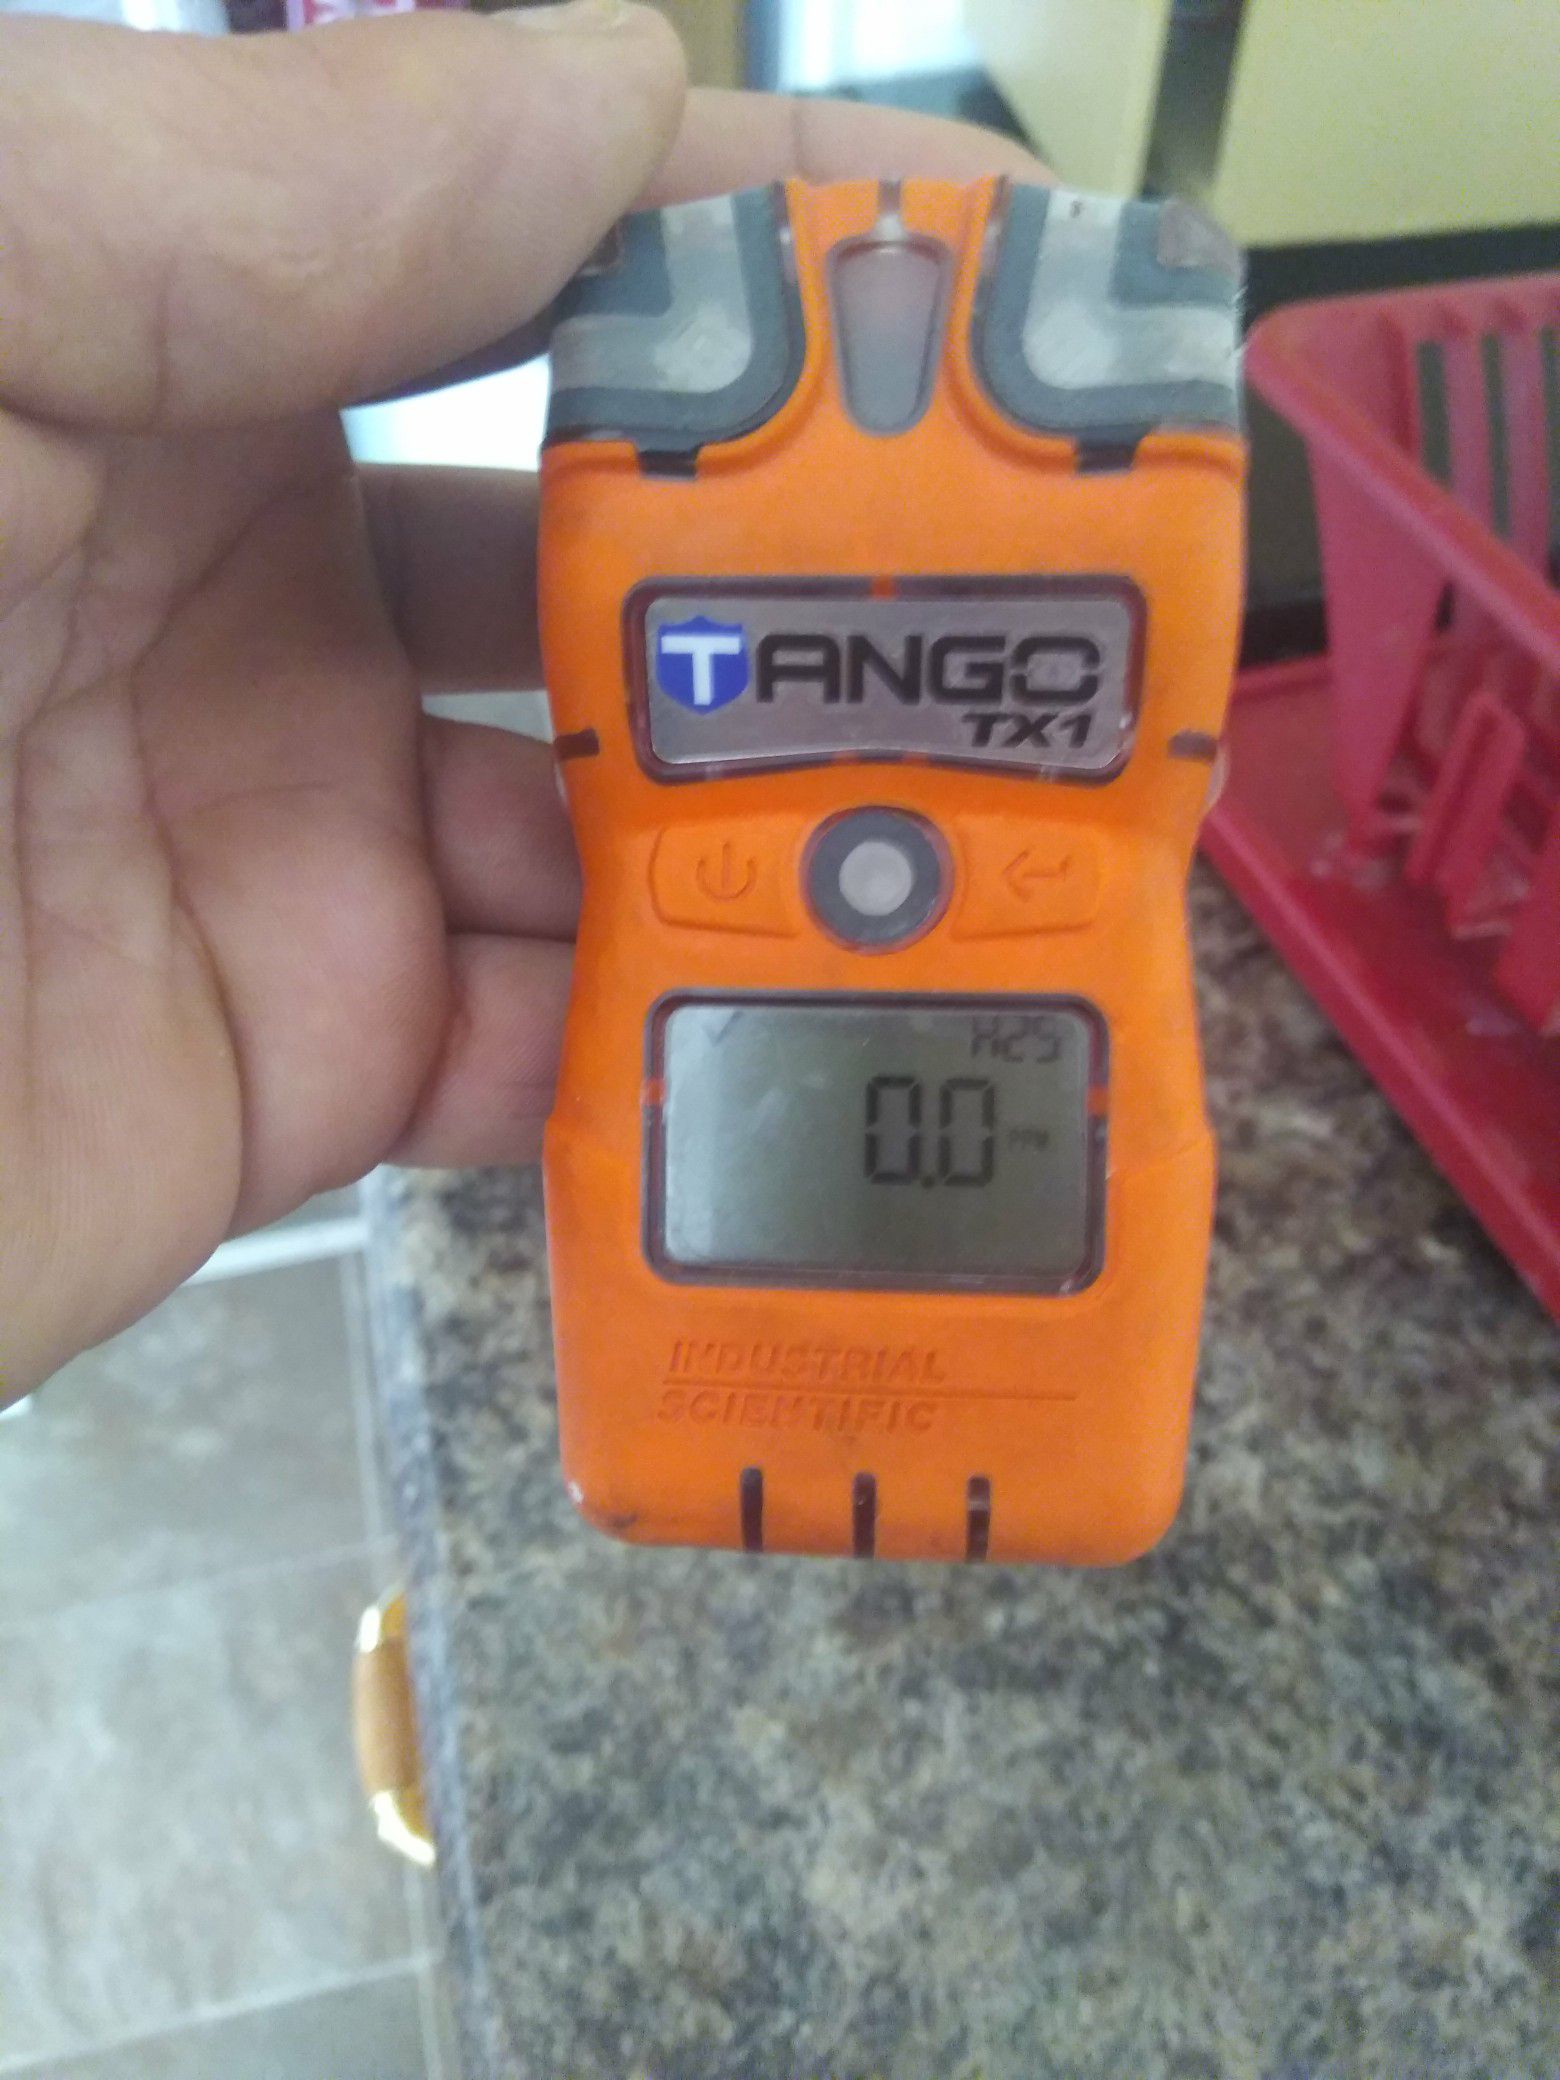 Tango Tx 1 Gas Detector Industrial